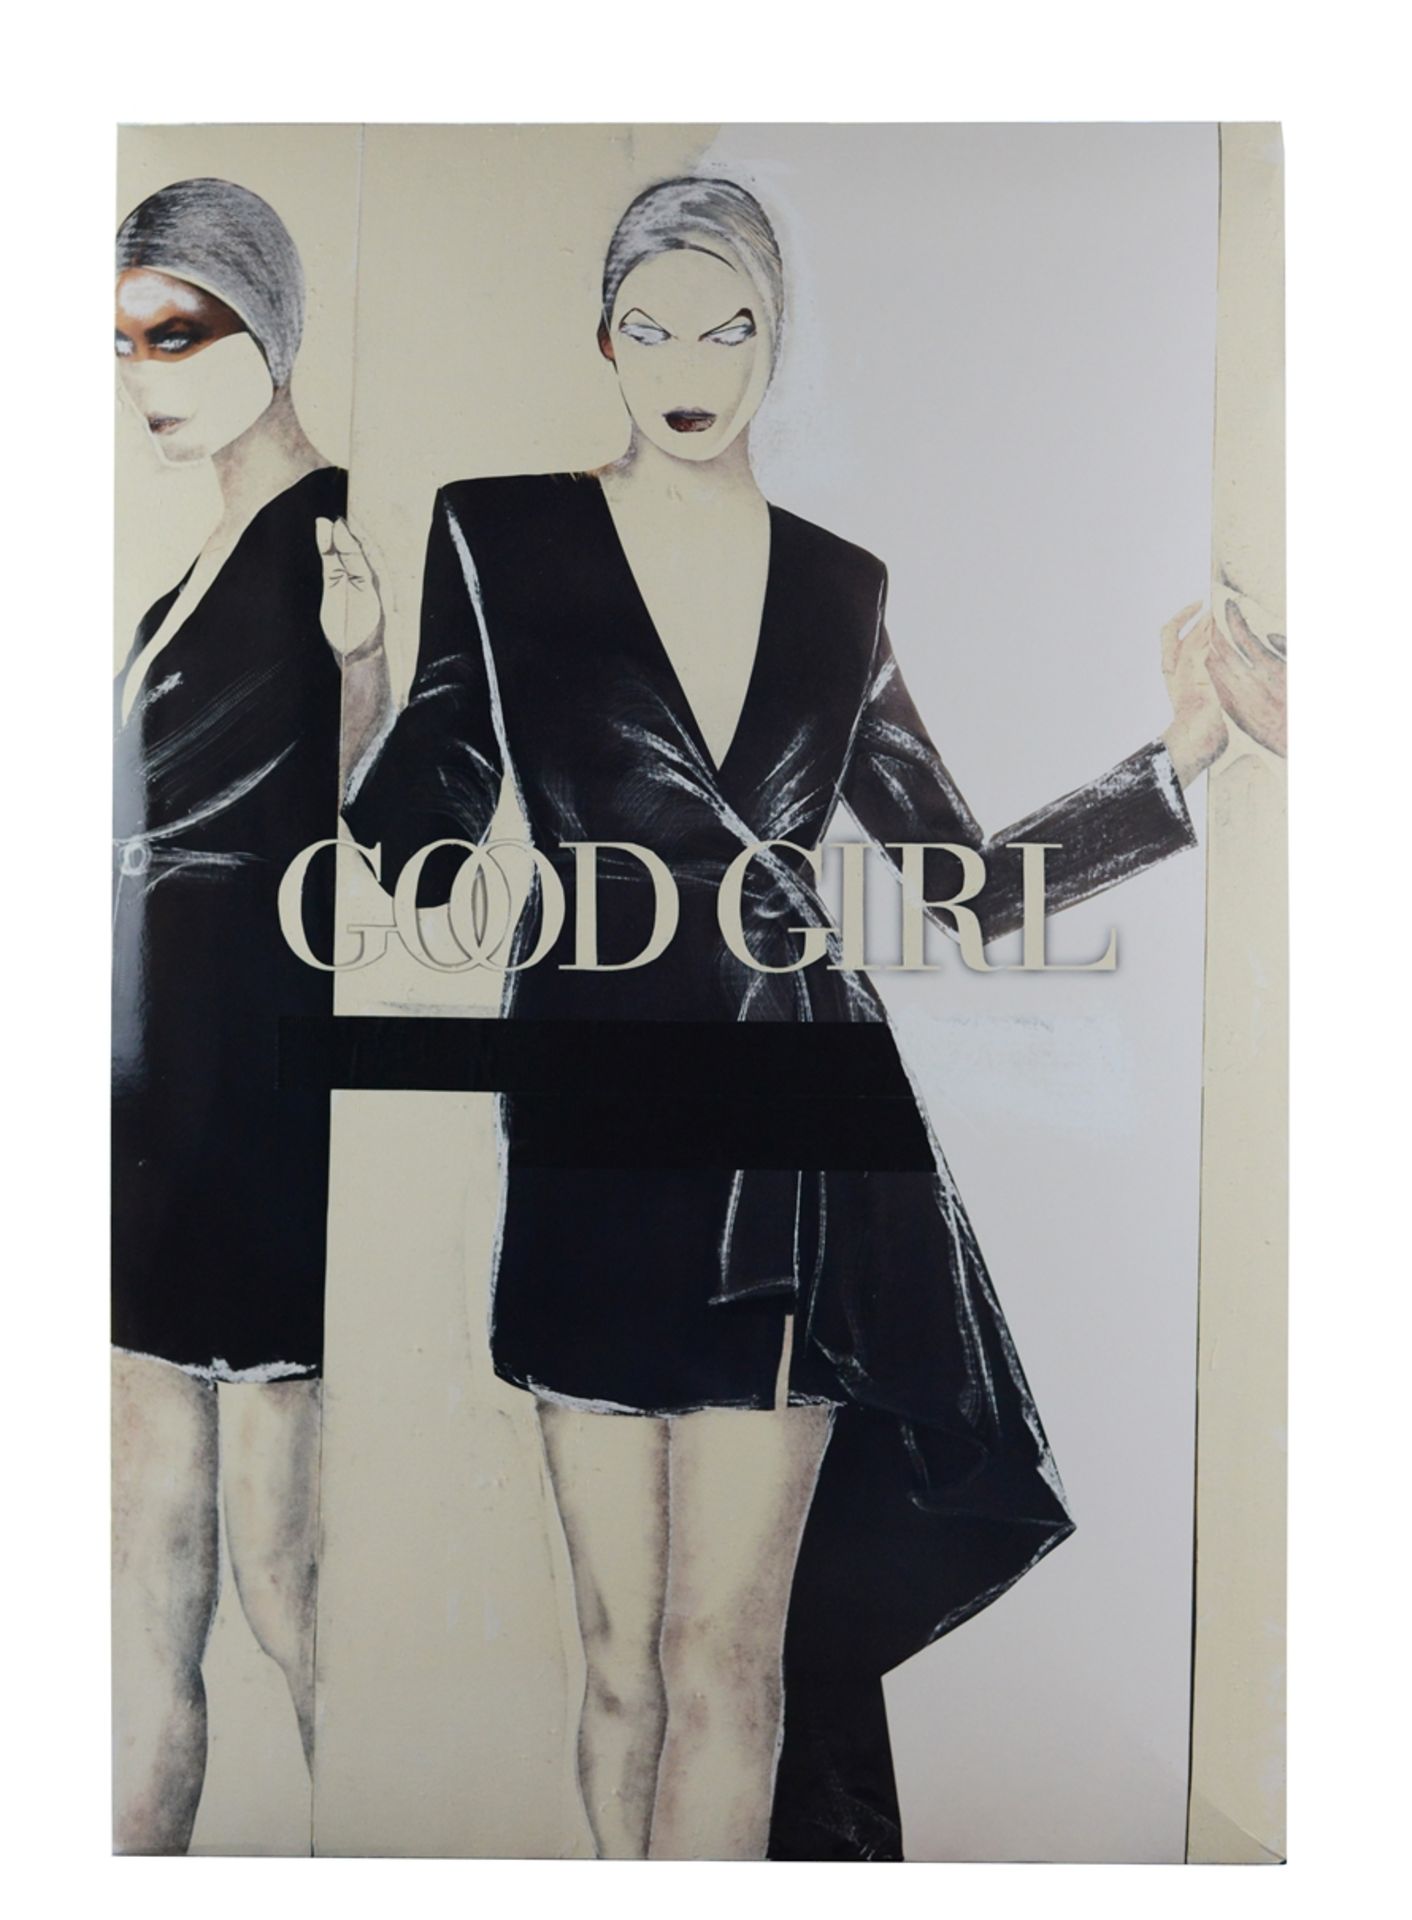 Scheurell, Stefanie (1980 Berlin) "Good Girl", advertising poster for the fragrance Good Girl proce